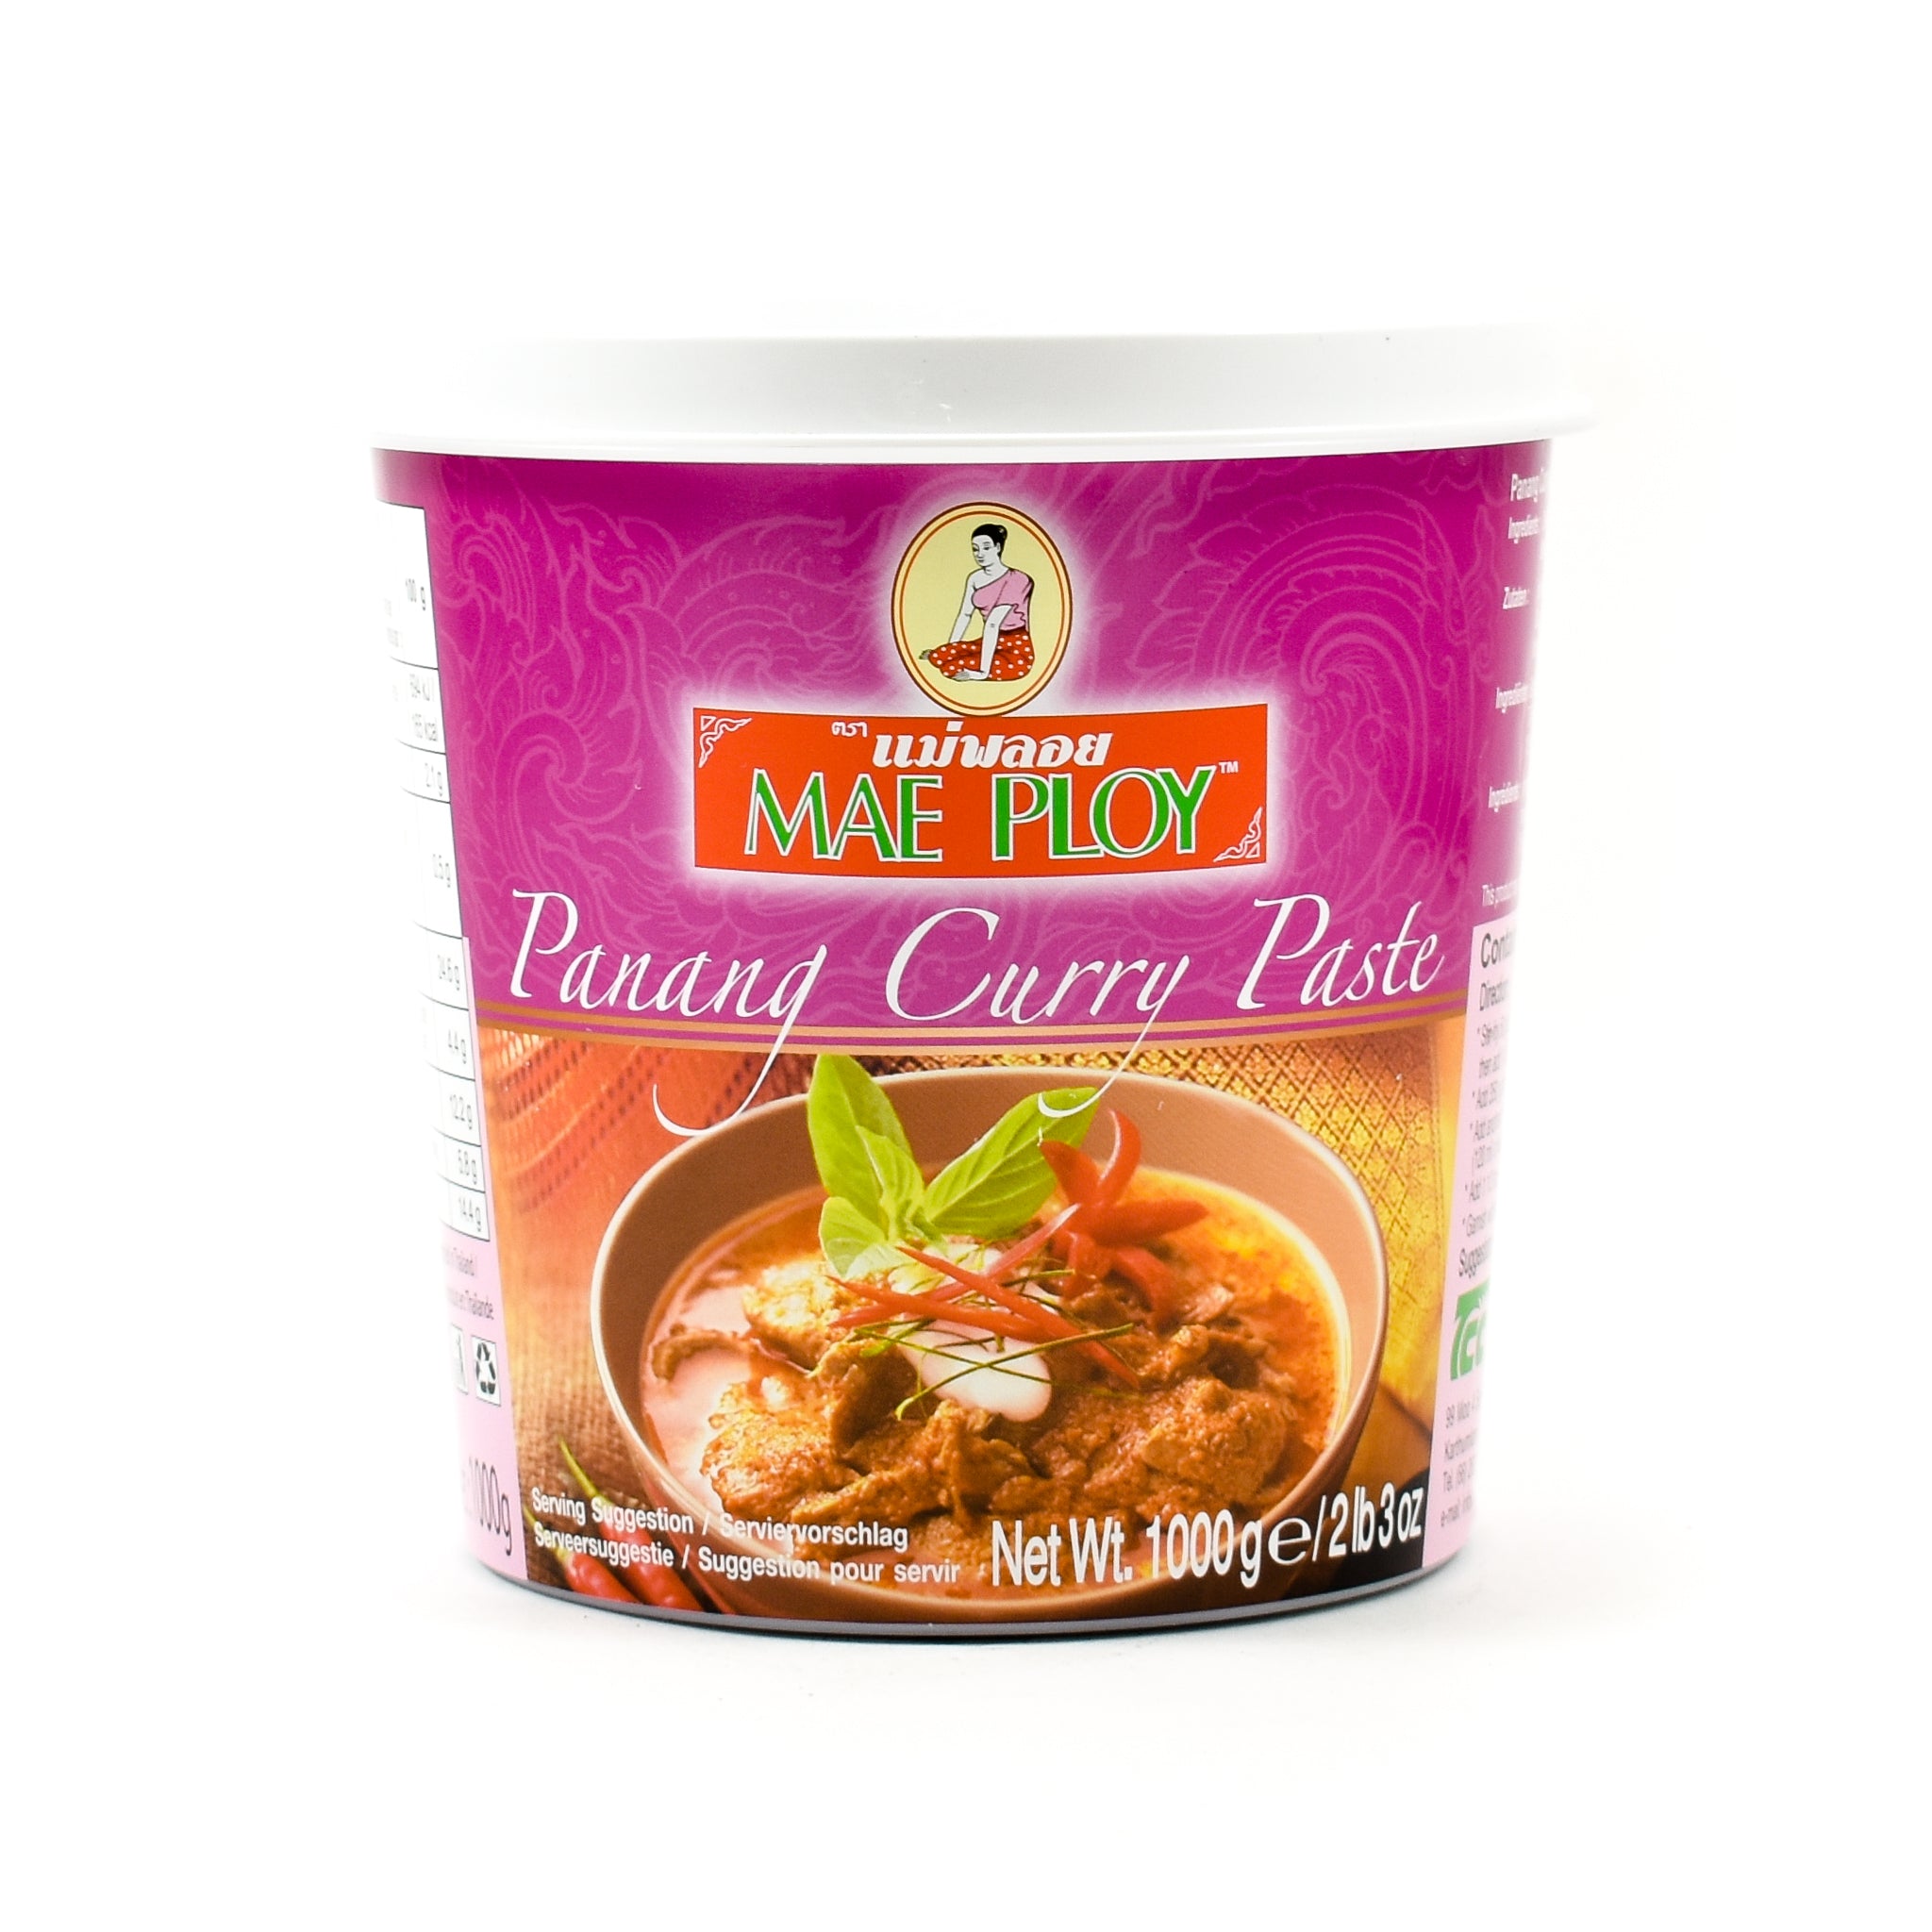 Mae Ploy Penang Curry Paste 1kg Ingredients Sauces & Condiments Asian Sauces & Condiments Southeast Asian Food